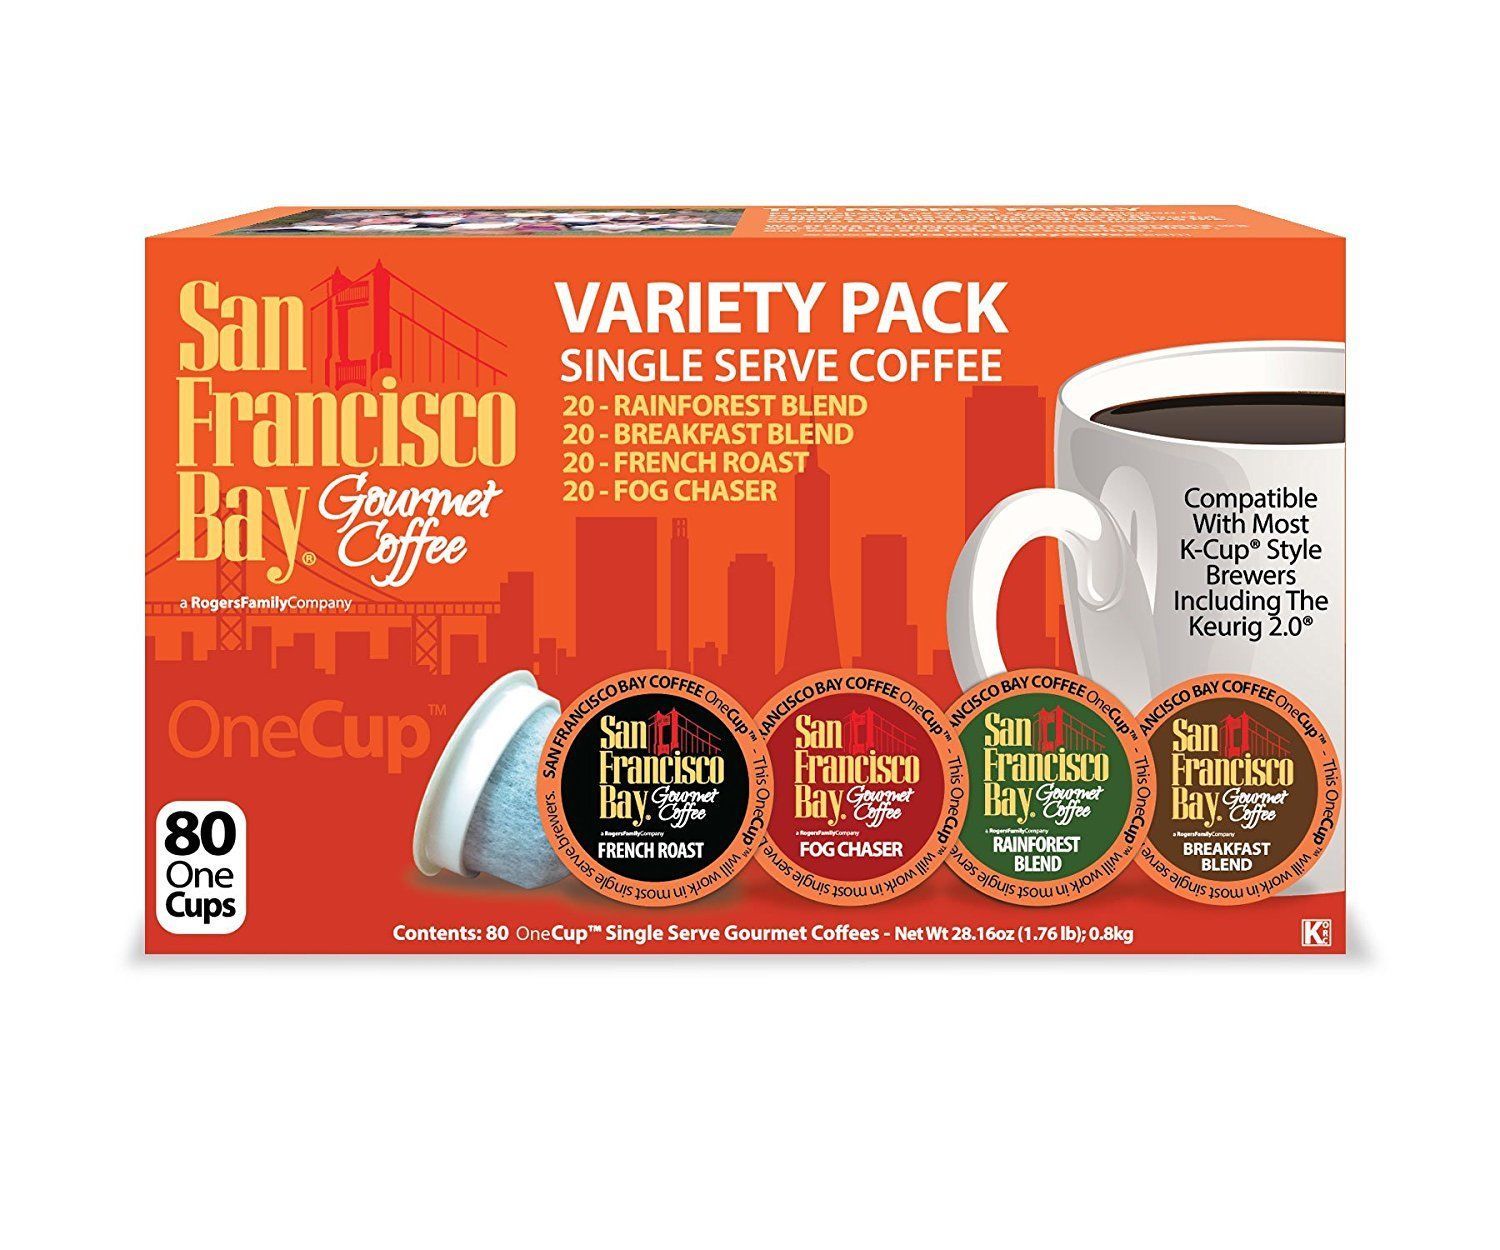 San Francisco Bay OneCup Variety Pack Coffee 80 to 320 Keurig K cup Pick Size - $57.89 - $199.89